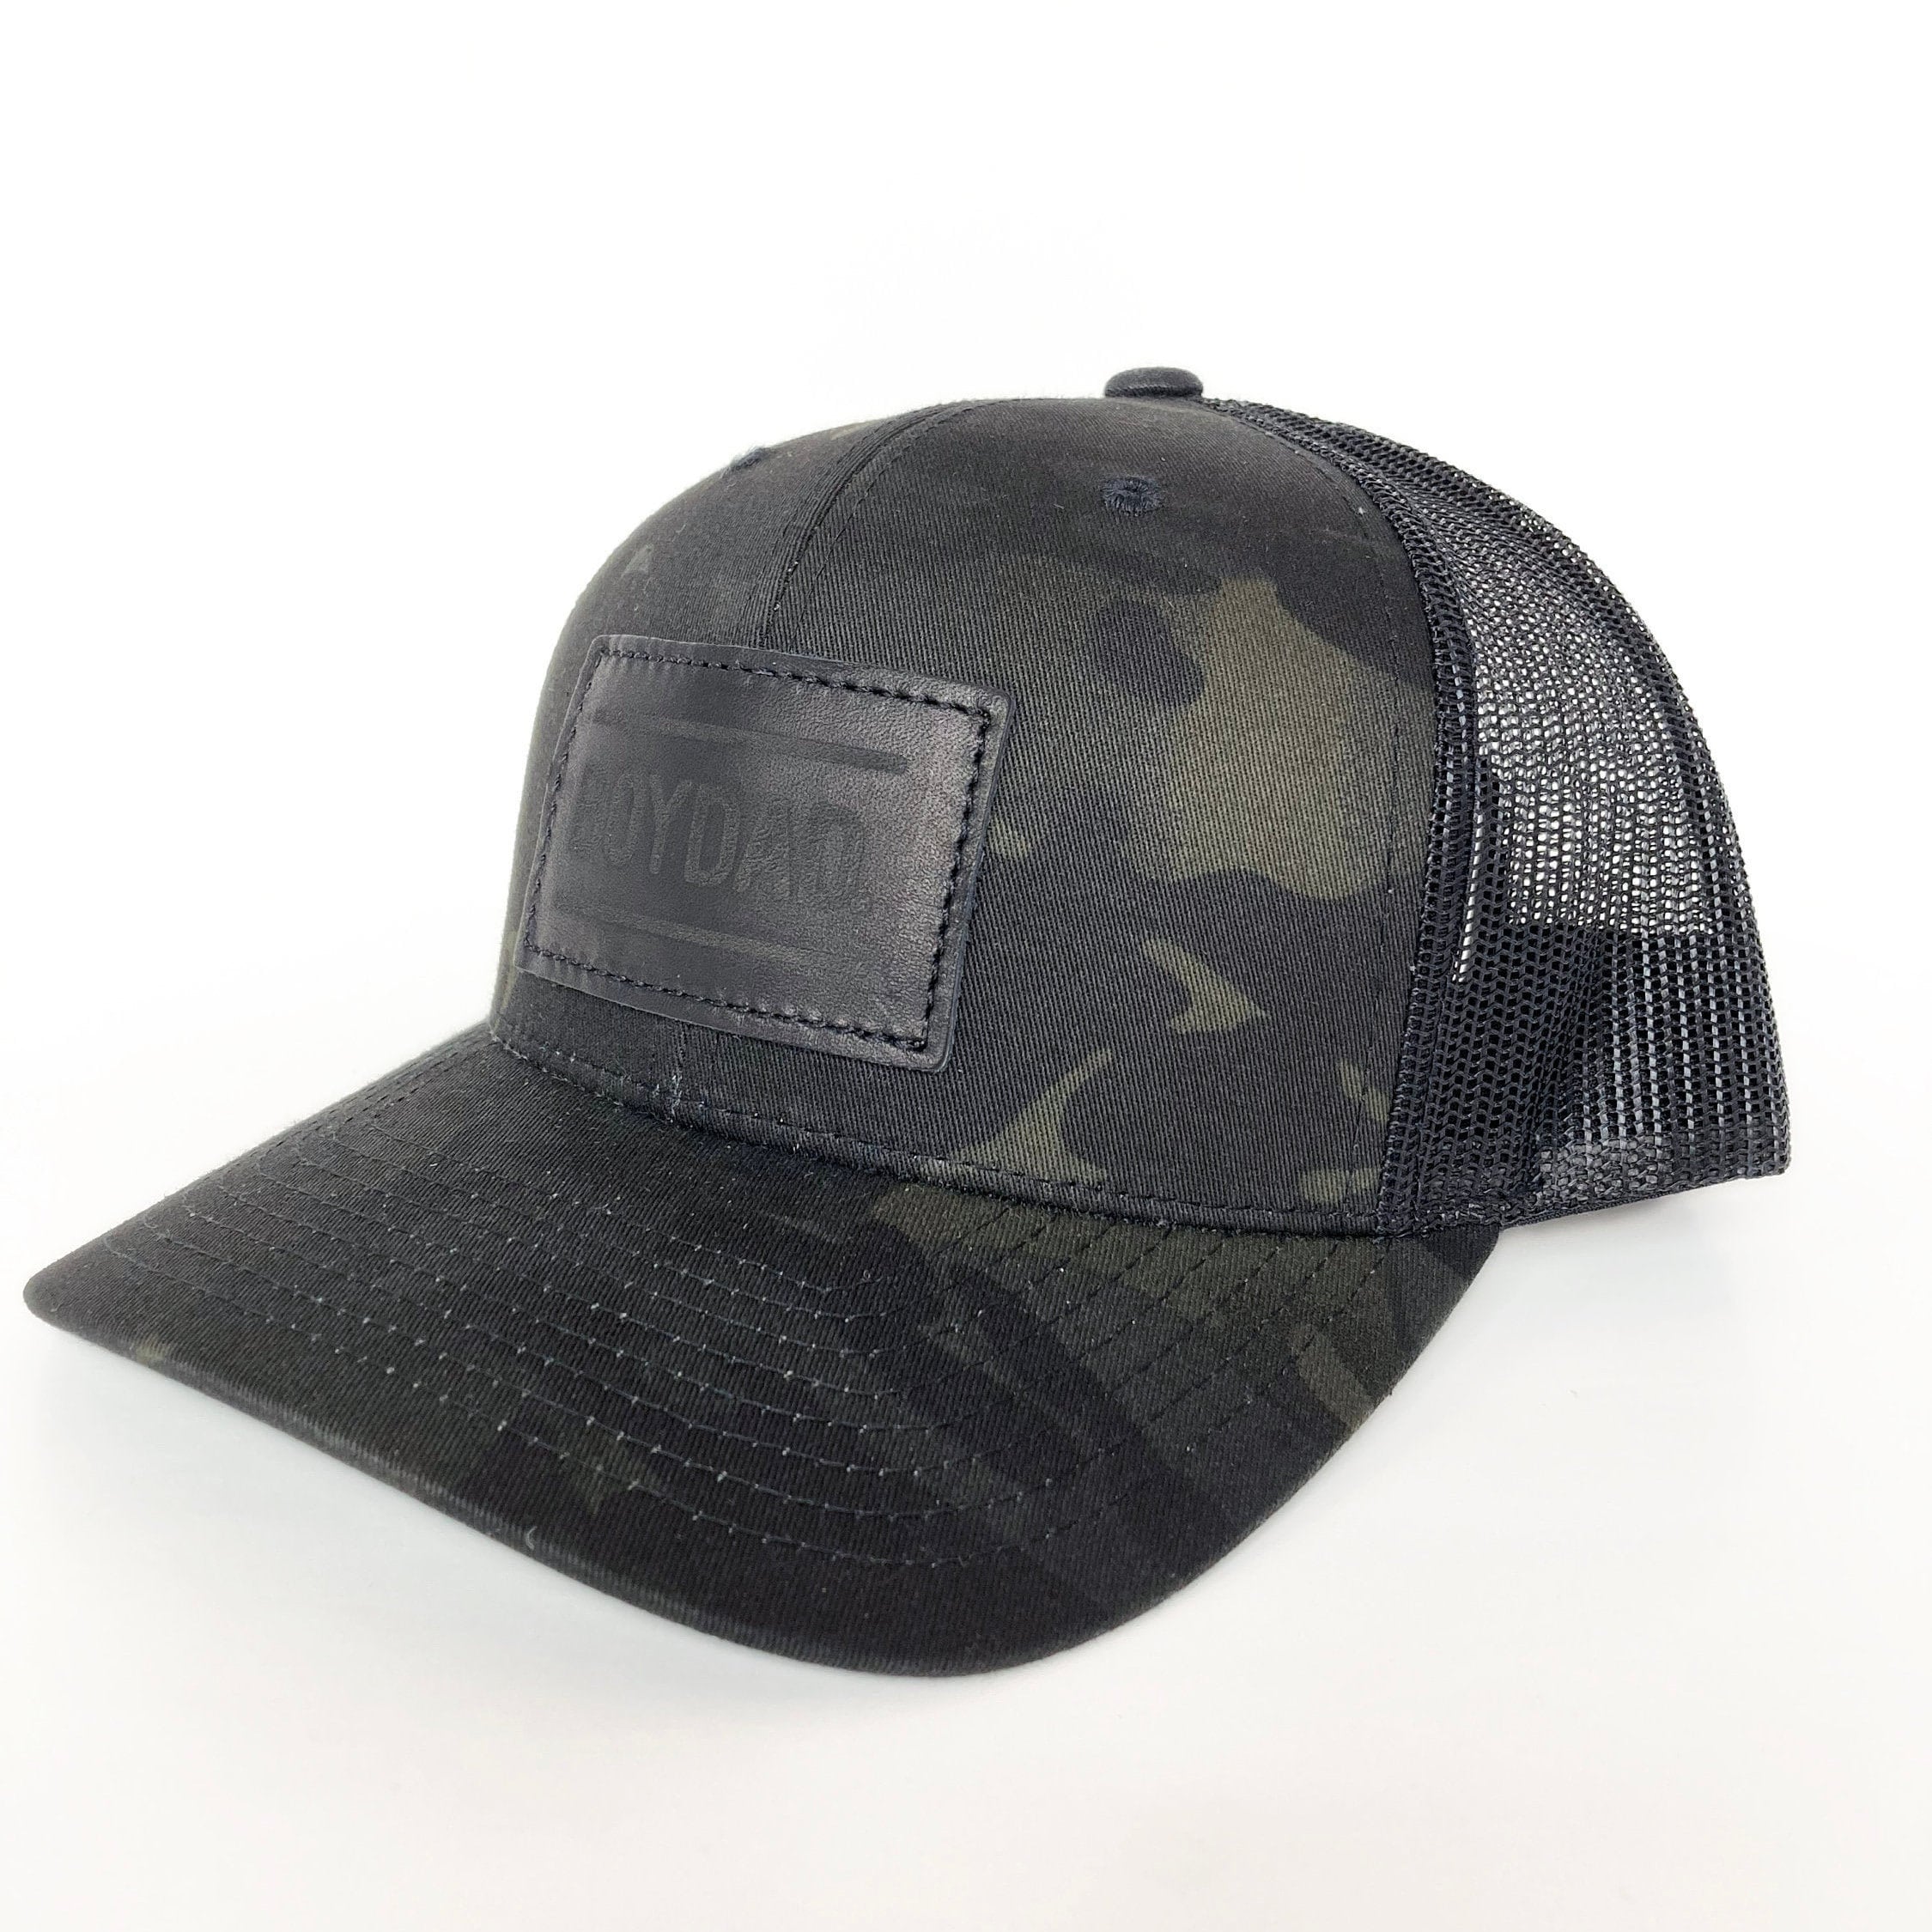 Boydad® Black Camo Leather Patch Trucker Hat